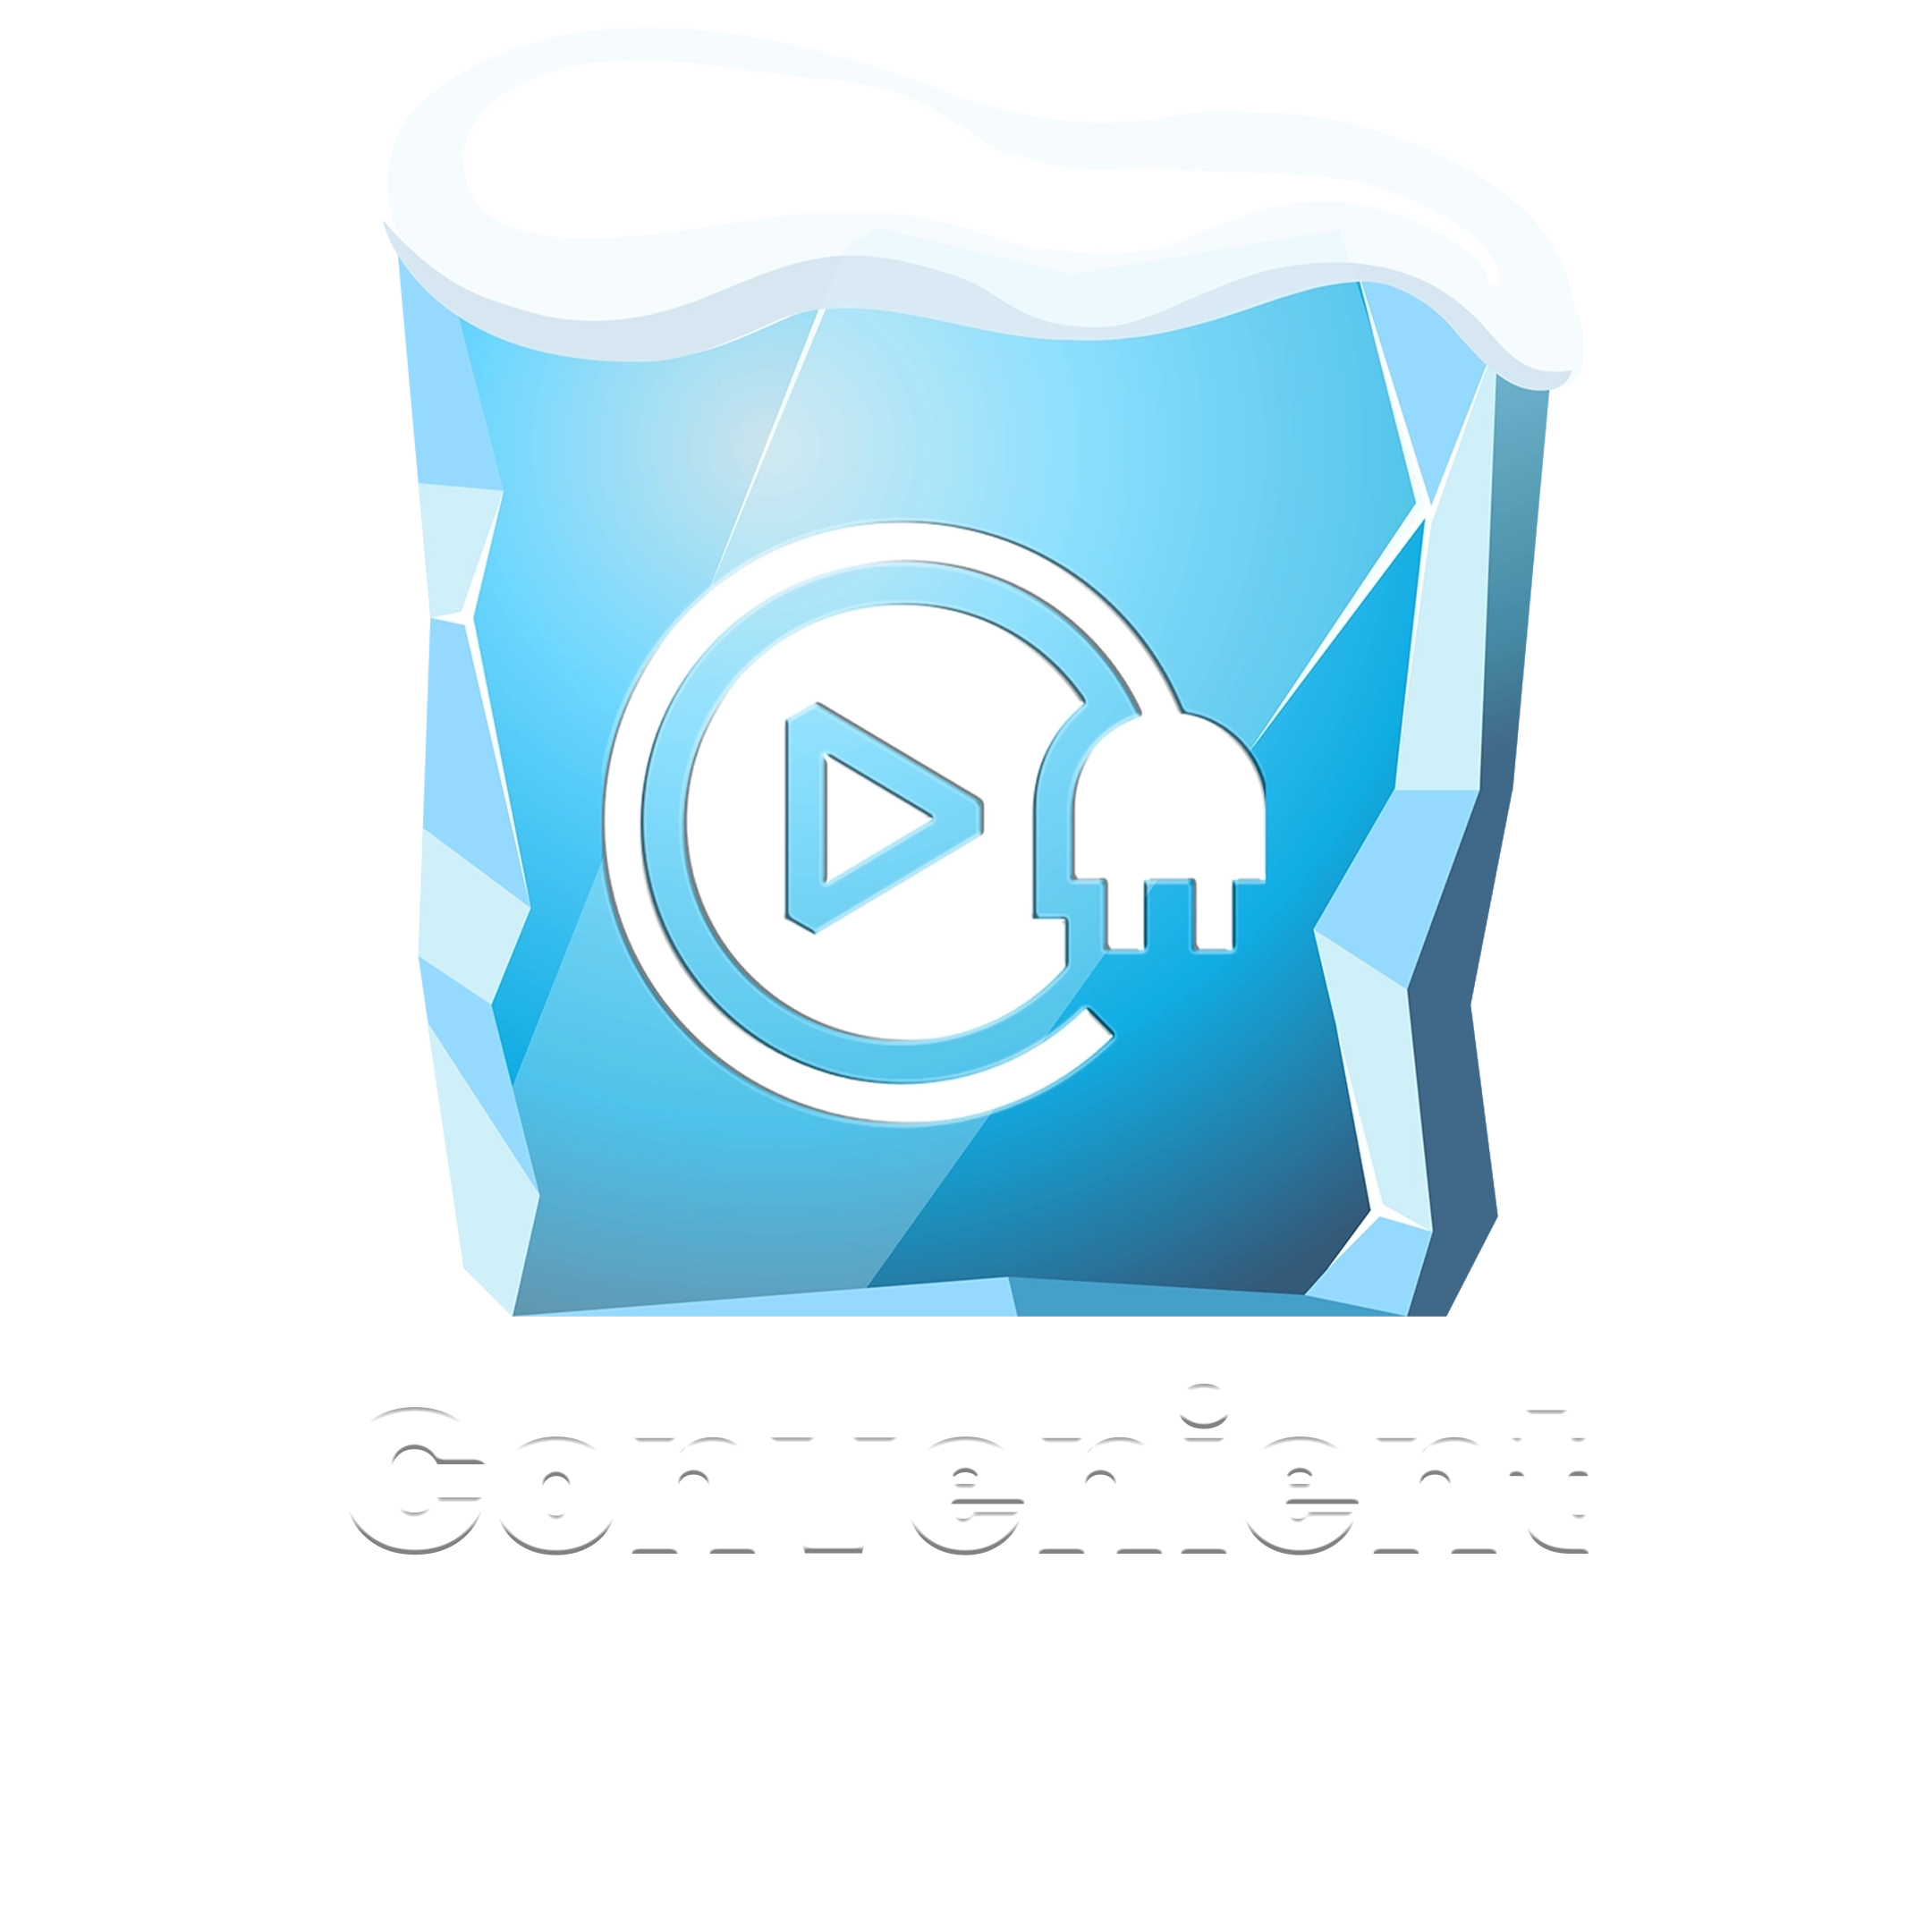 Convenient